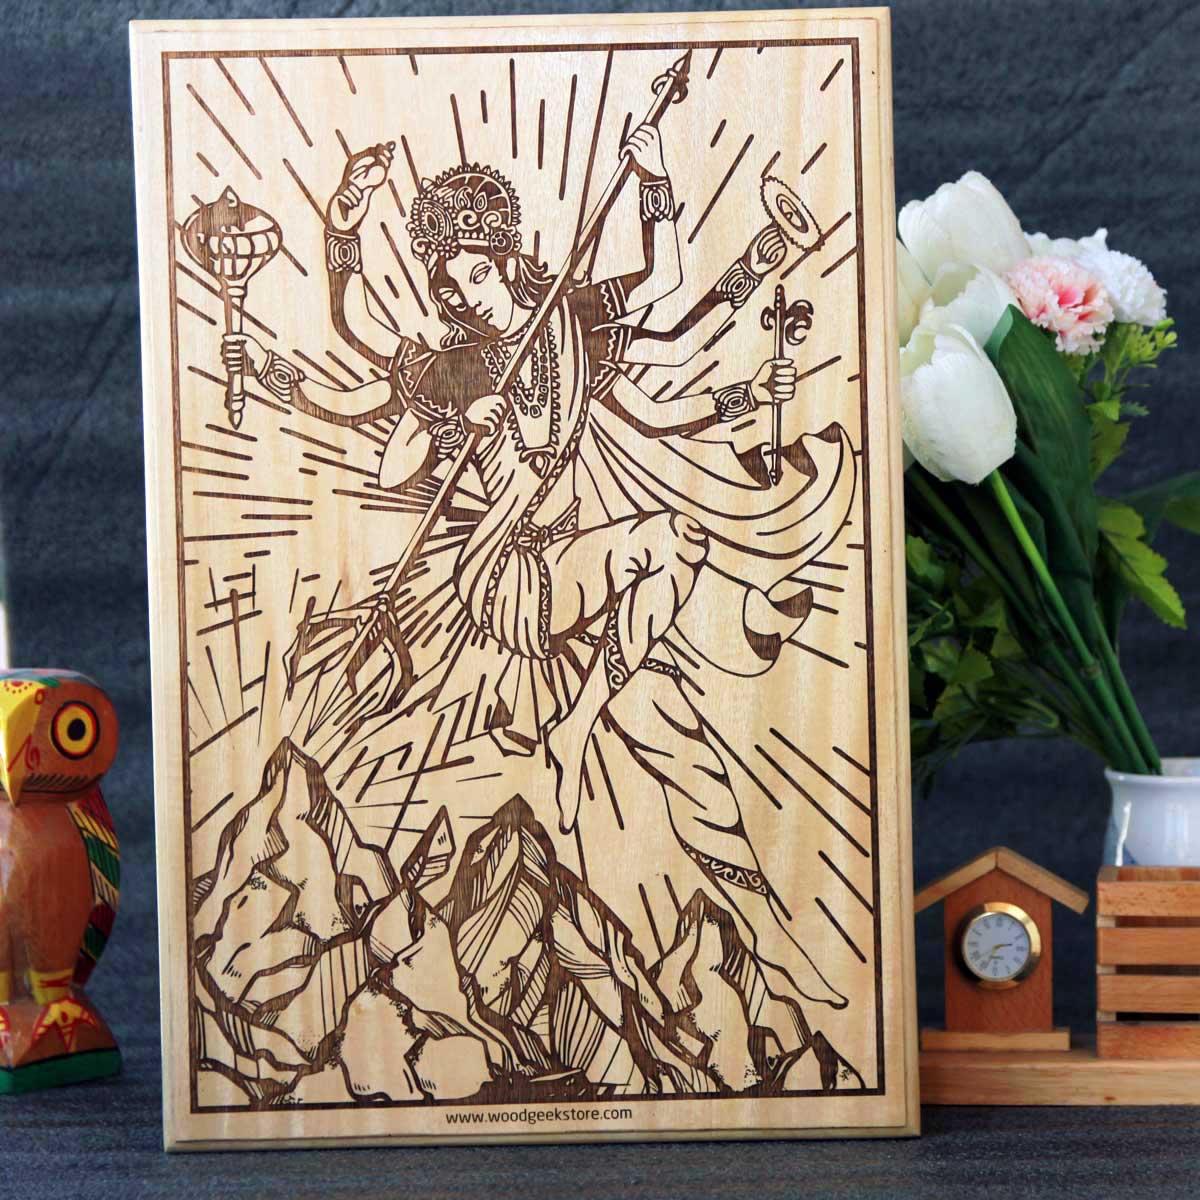 Durga The Warrior Goddess Carved Wooden Poster